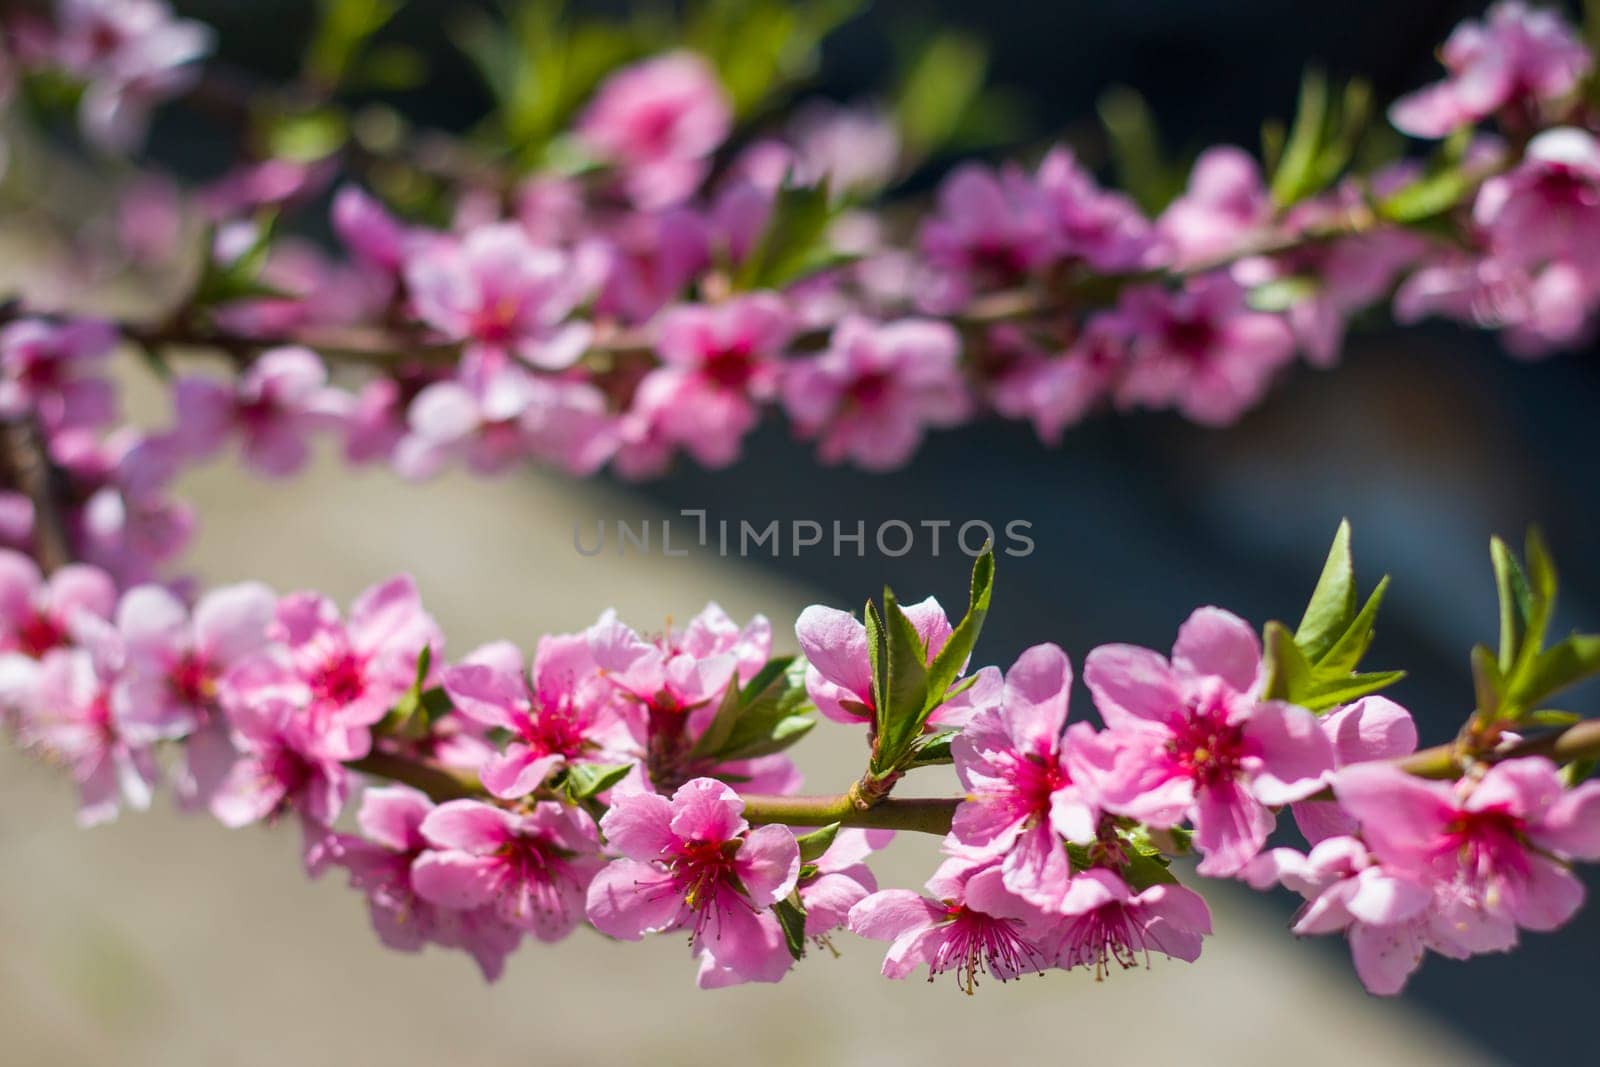 Nectarine peach spring flowers on tree branch. Agriculture beautiful season farming springtime landscape